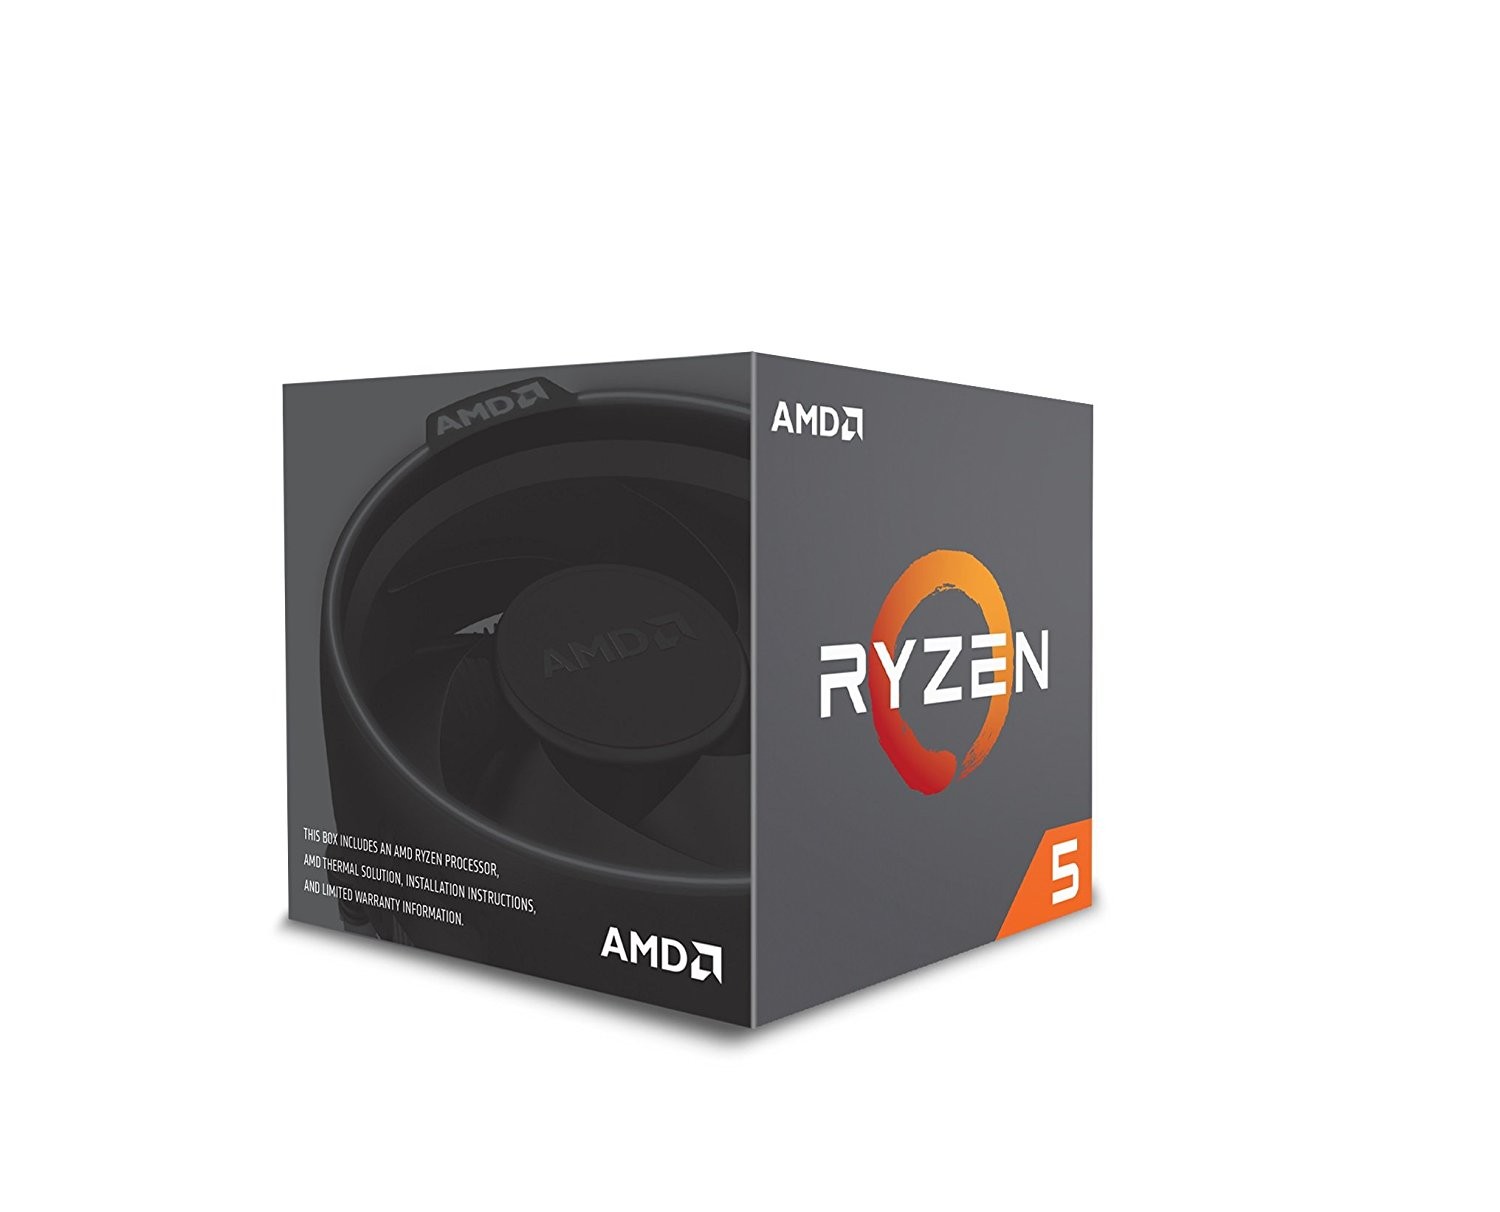 AMD Ryzen 5 1500X Desktop Processor